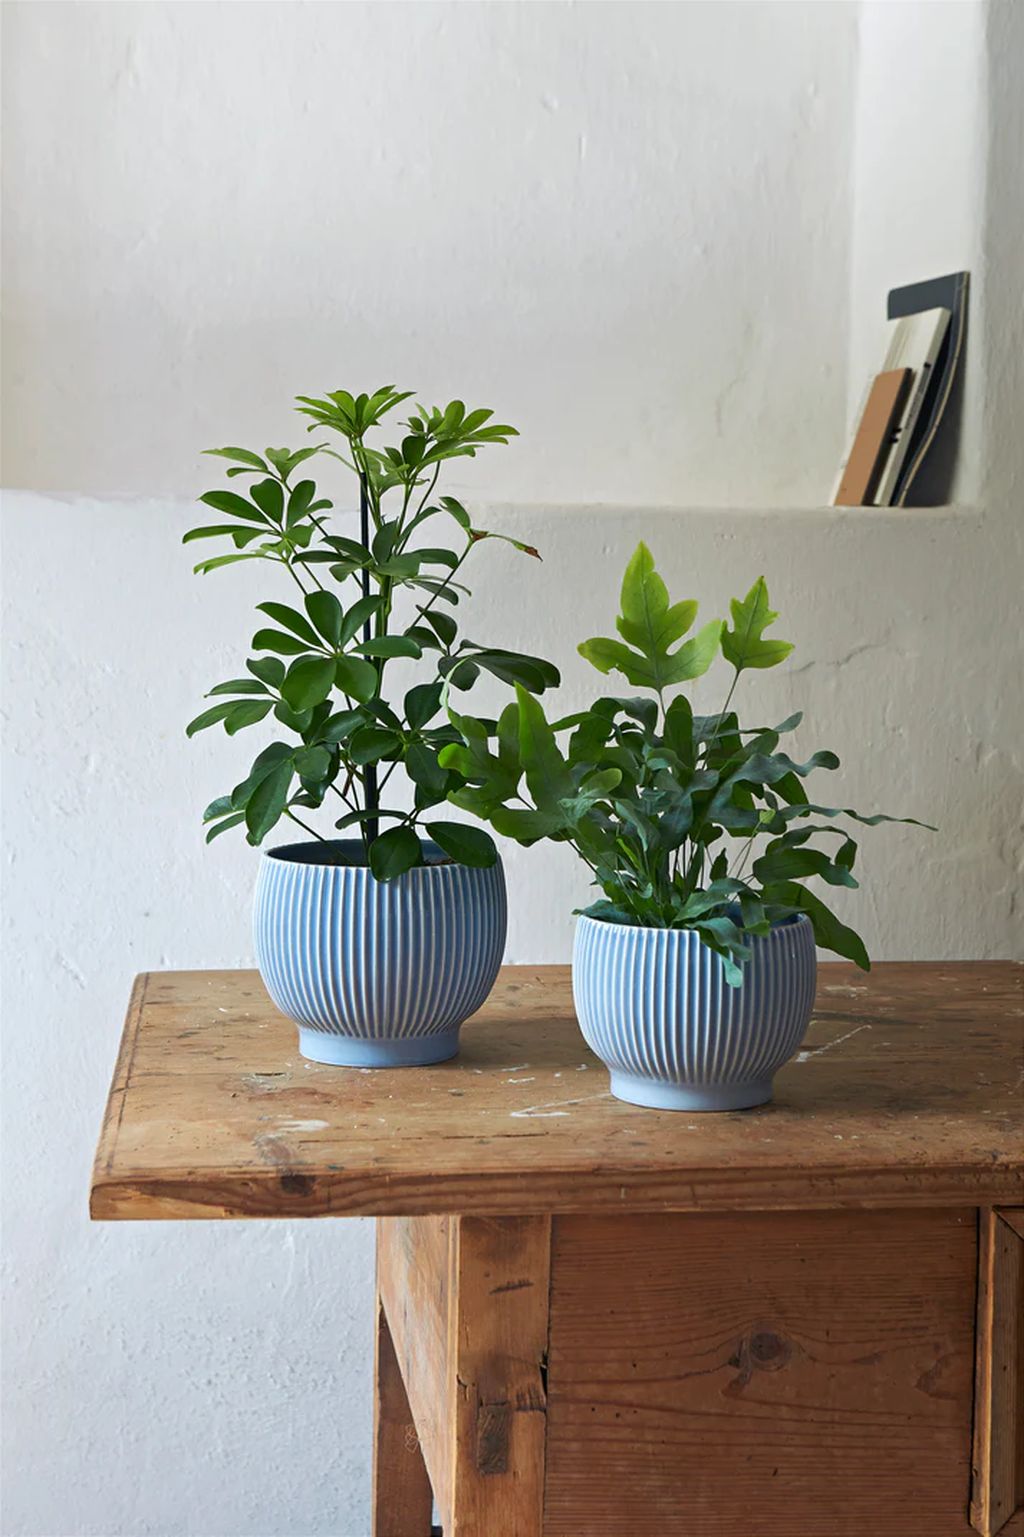 Knabstrup Keramik Flowerpot With Wheels ø 16.5 Cm, Lavender Blue